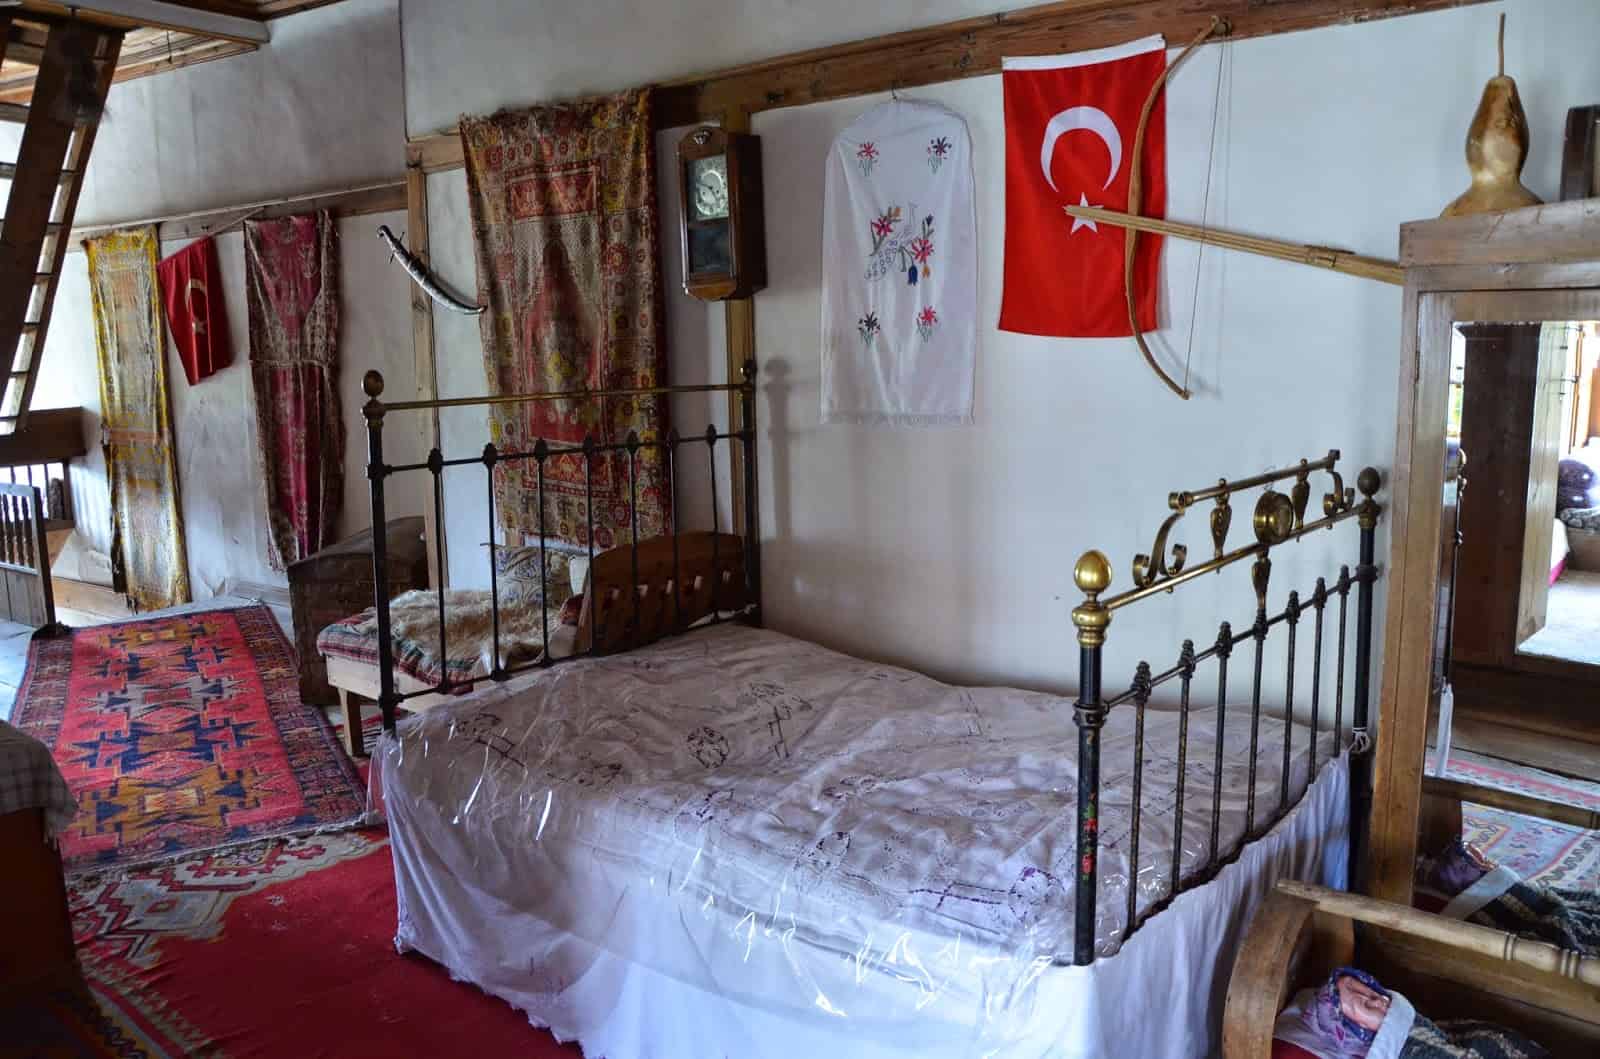 Sipahioğlu Konağı in Yörükköyü, Turkey